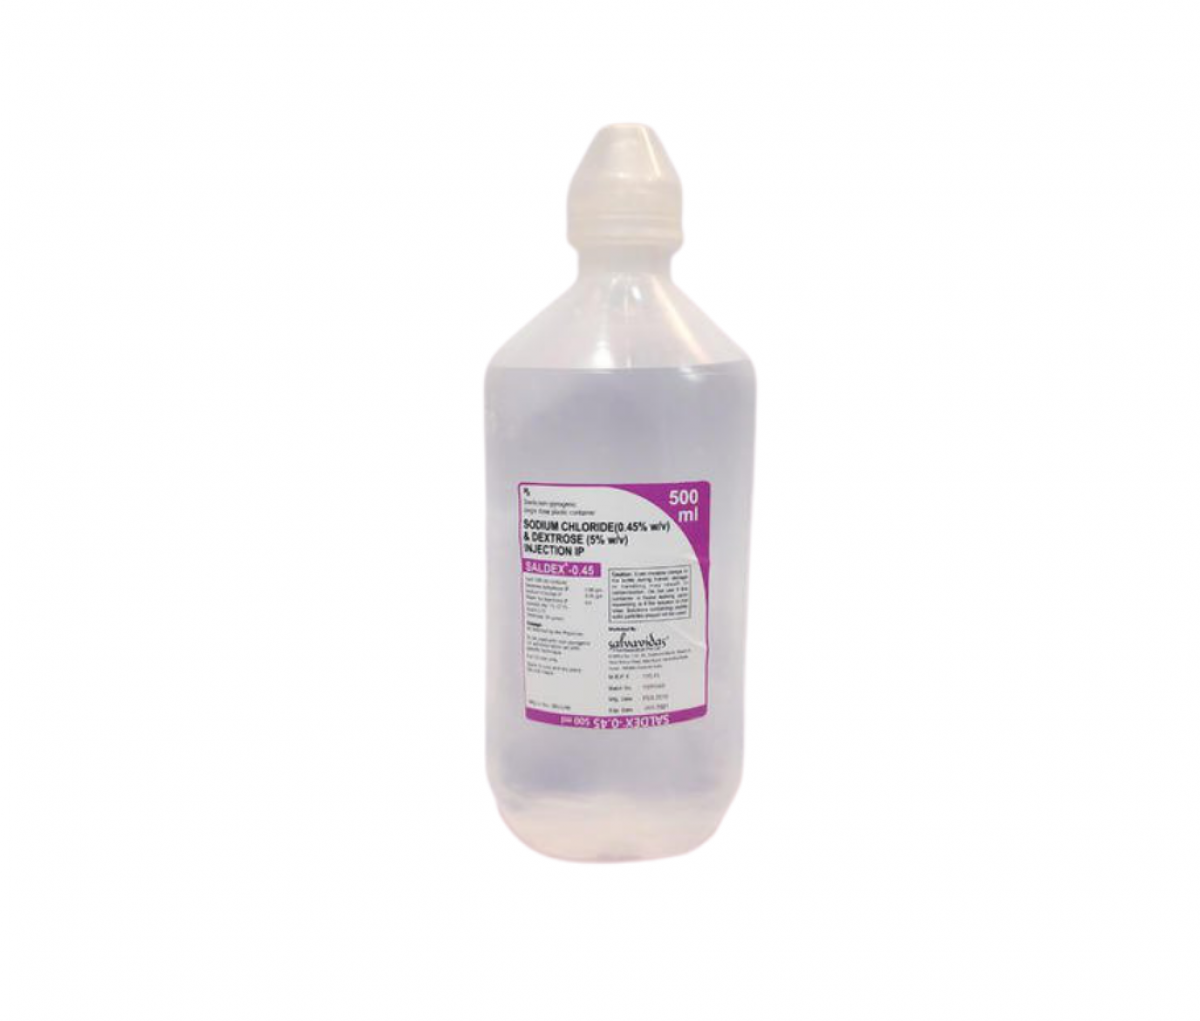 Dextrose Normal saline 0.9% Injection 500ml